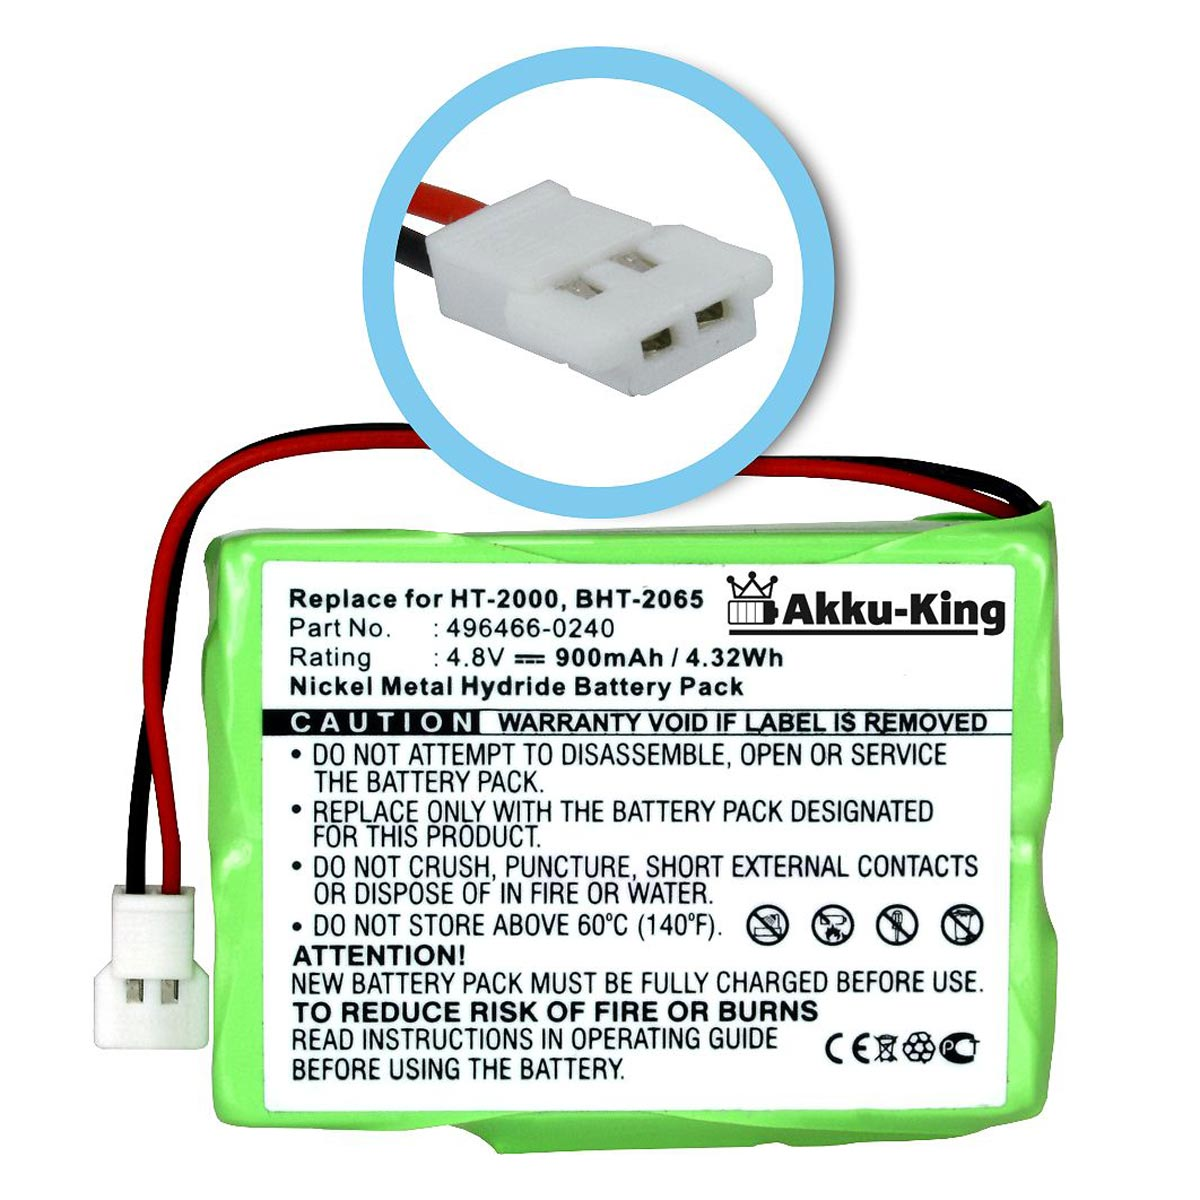 AKKU-KING Akku 4.8 mit kompatibel Geräte-Akku, Denso 900mAh Volt, 49644-0240 Ni-MH